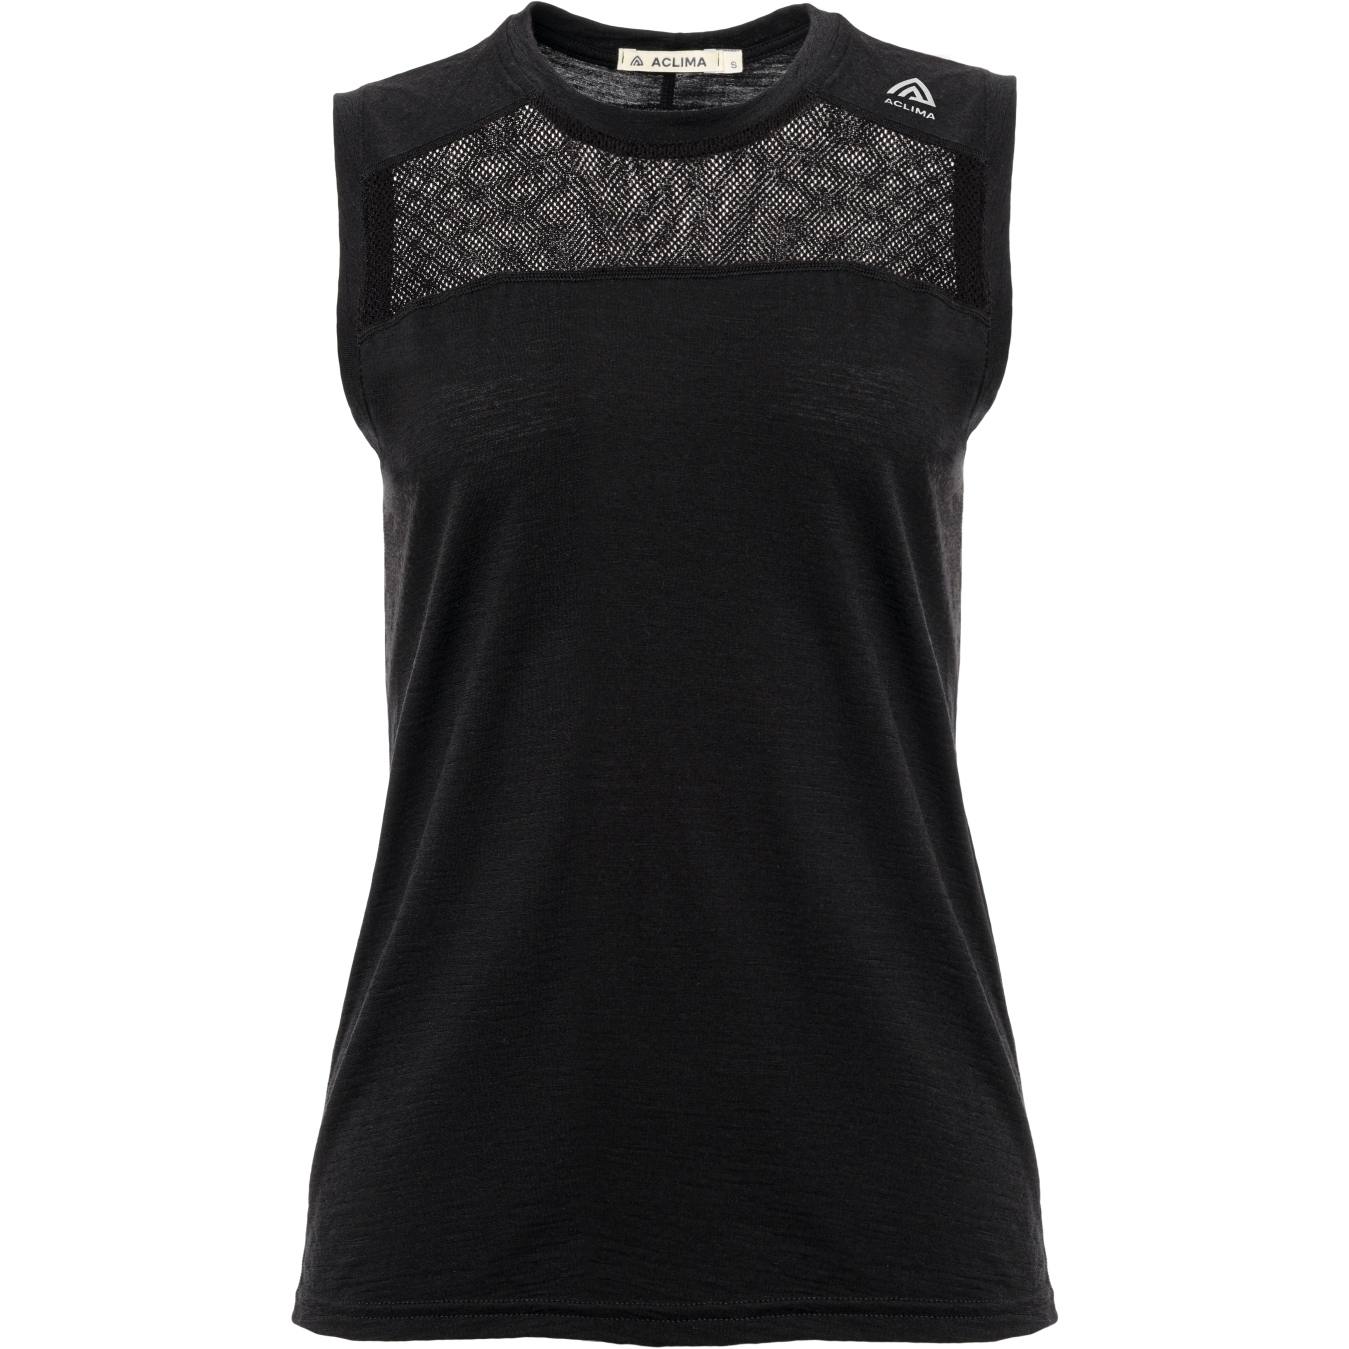 Produktbild von Aclima Lightwool Sports Singlet Ärmelloses Shirt Damen - jet black